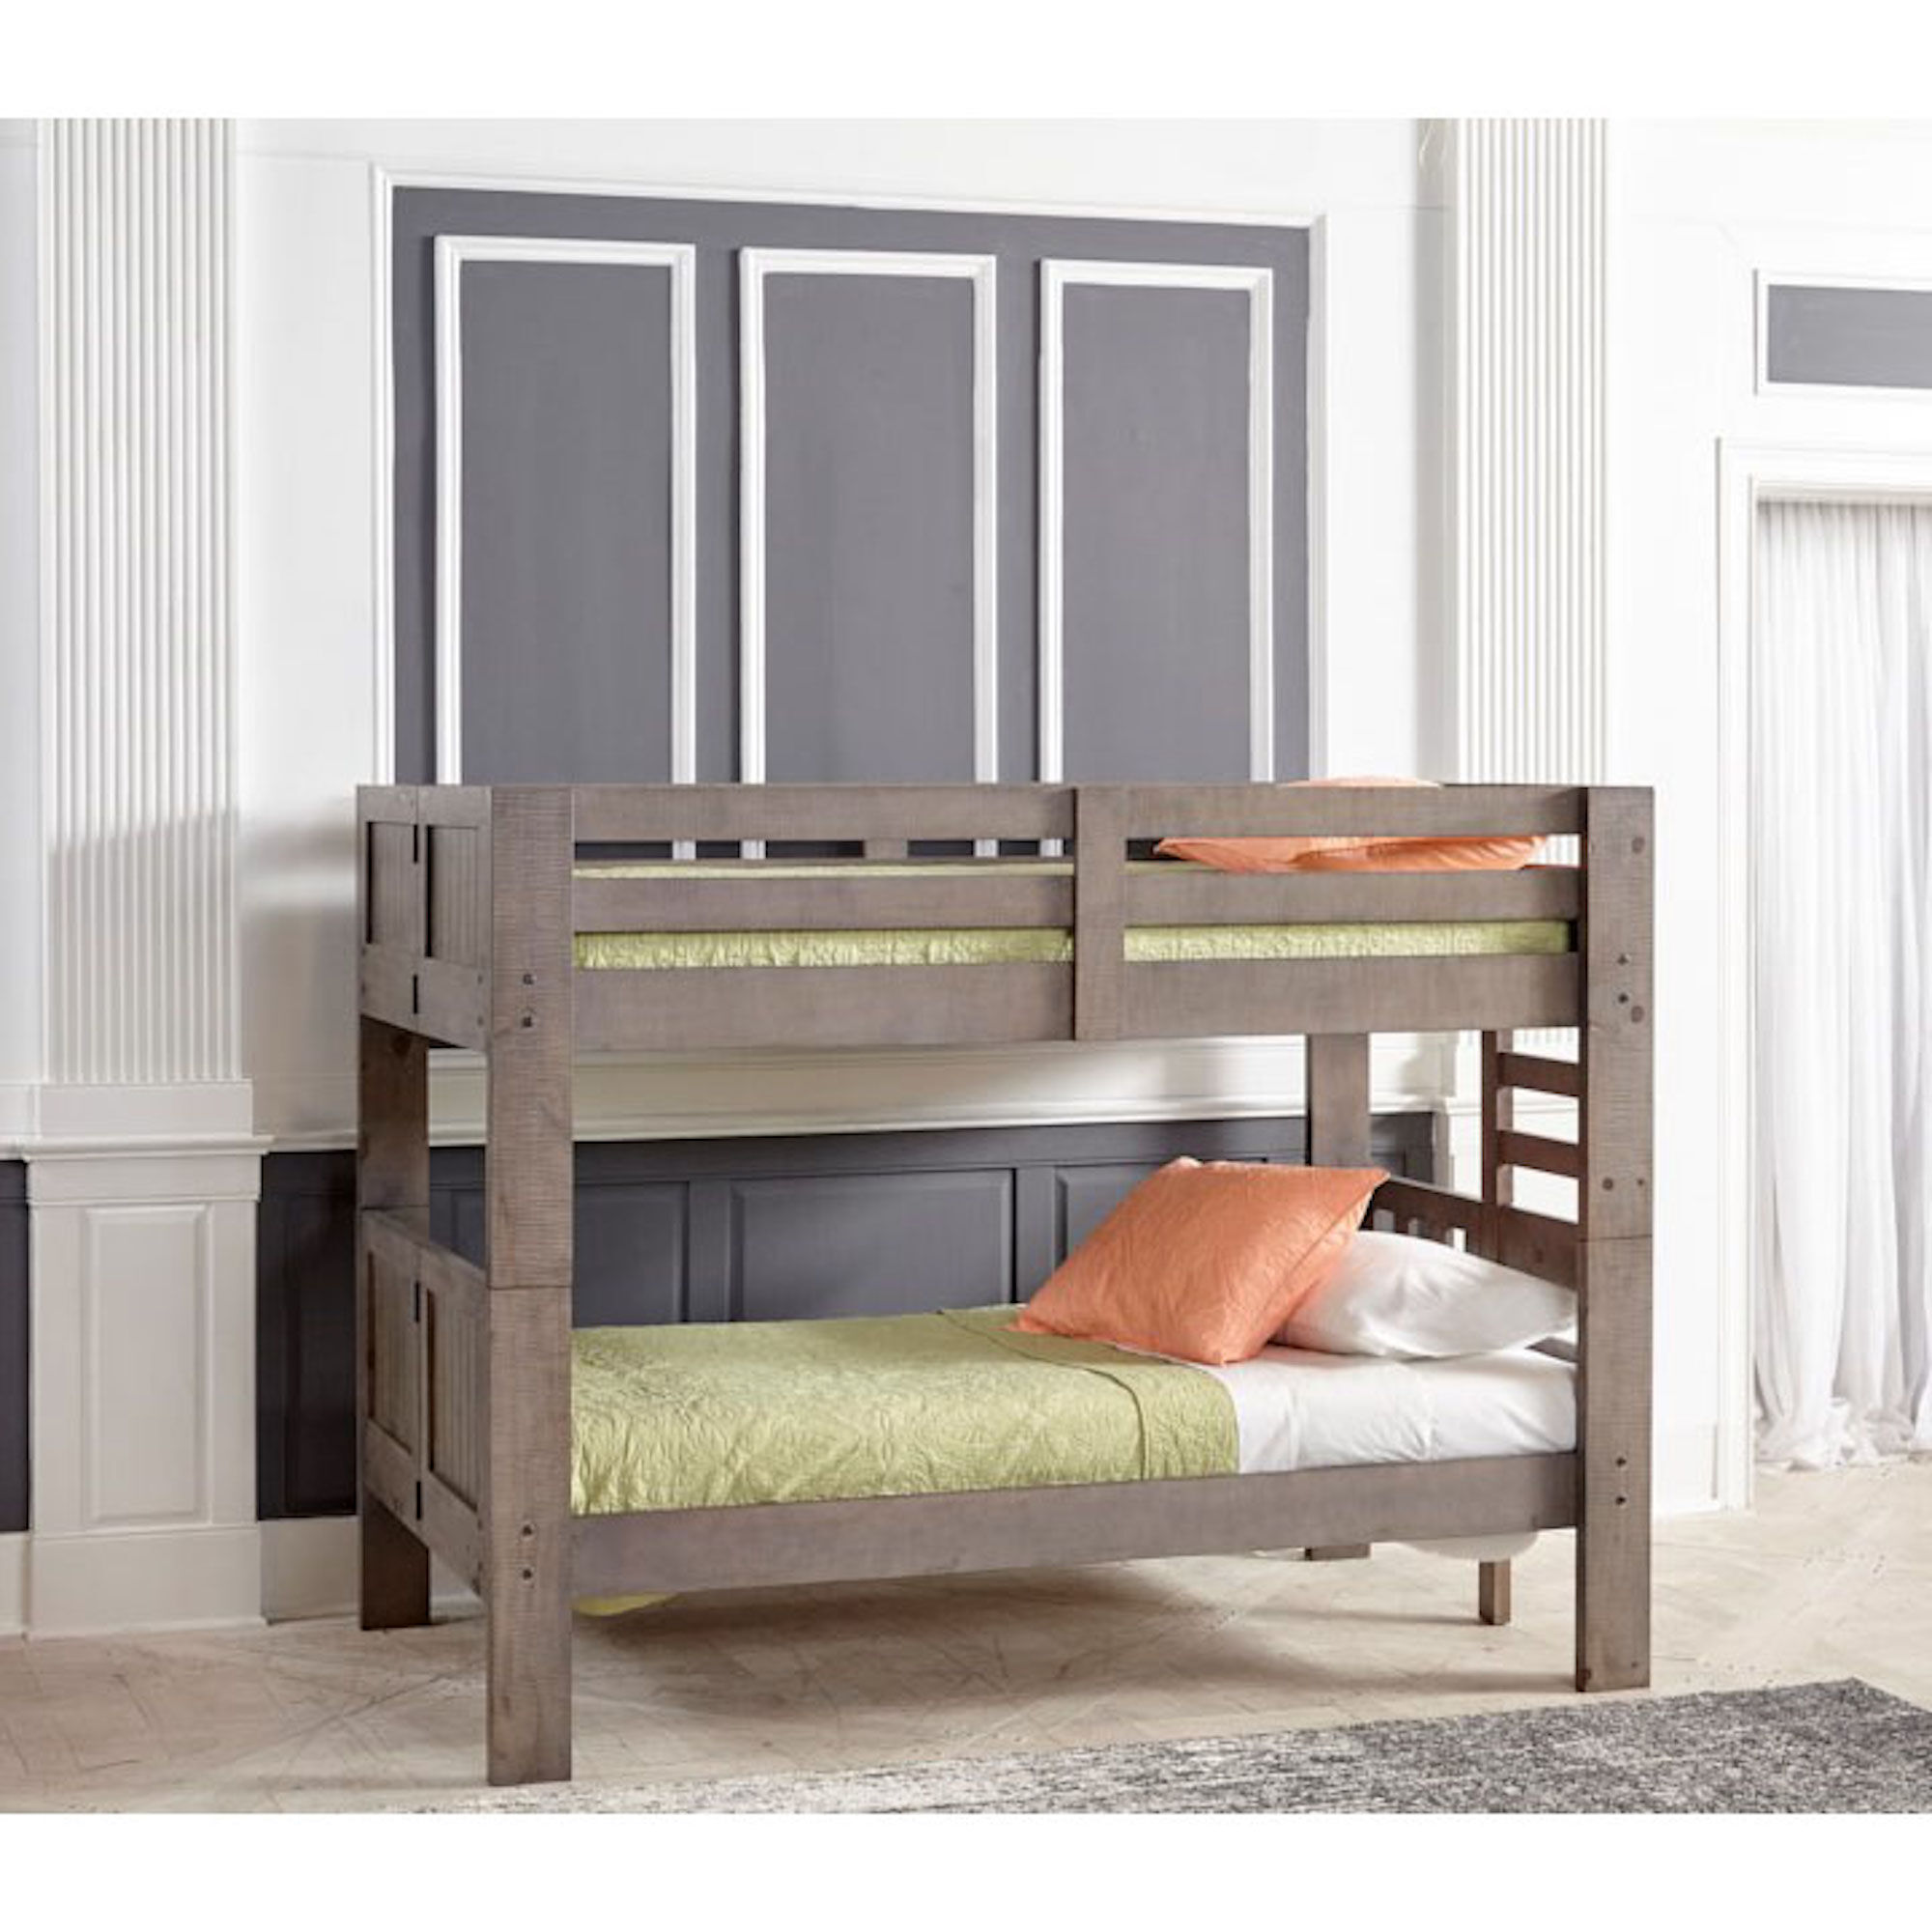 twin over full bunk bed mattress set